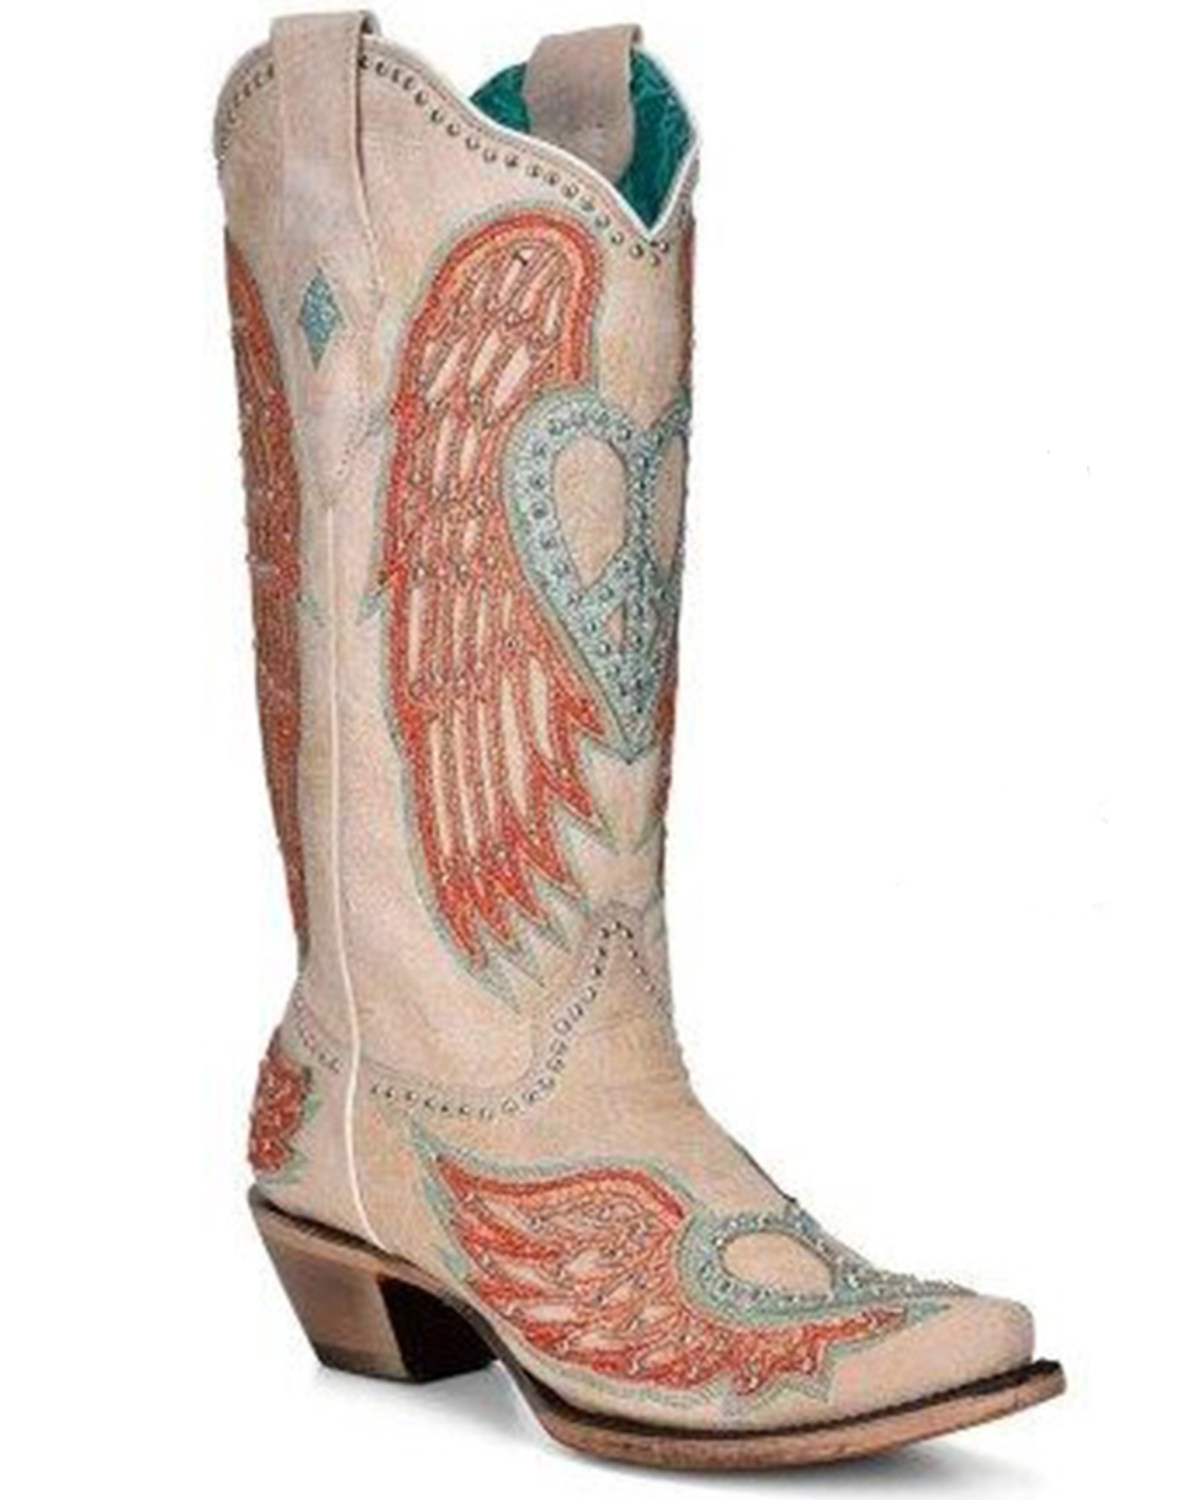 Corral Women's Heart Wings Tall Western Boots - Snip Toe